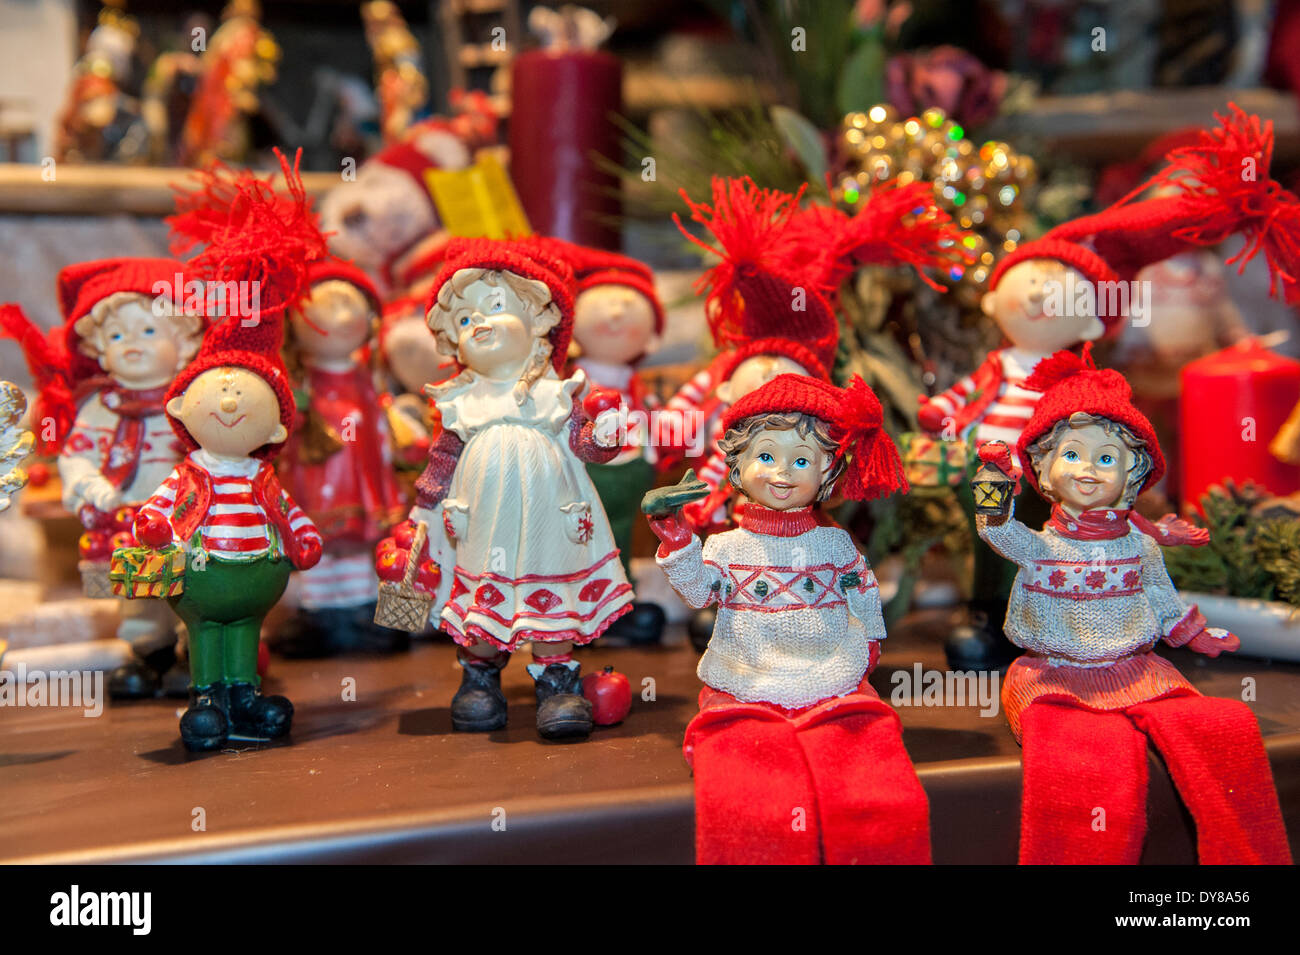 Hummel-style holiday figurines, market, Rudesheim, Germany Photo - Alamy